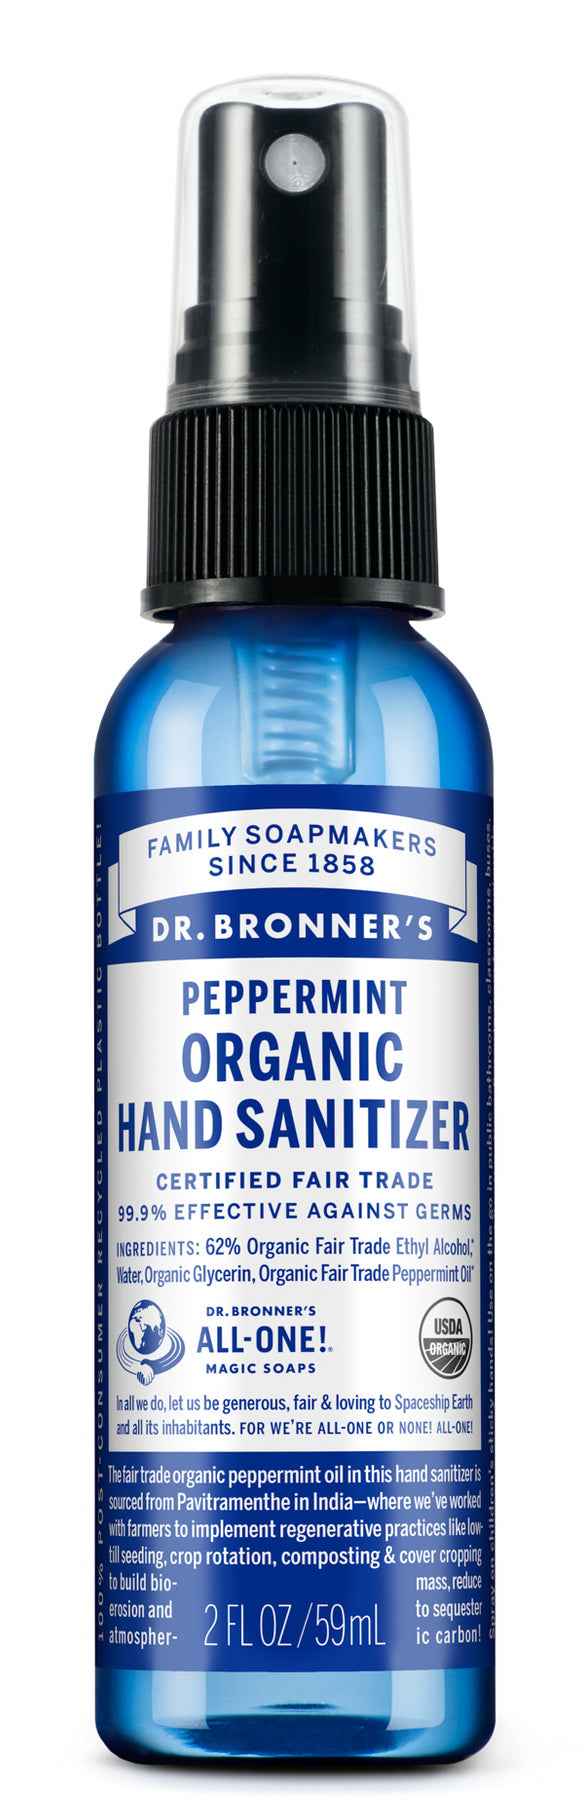 Dr. Bronner's Hand Sanitizer